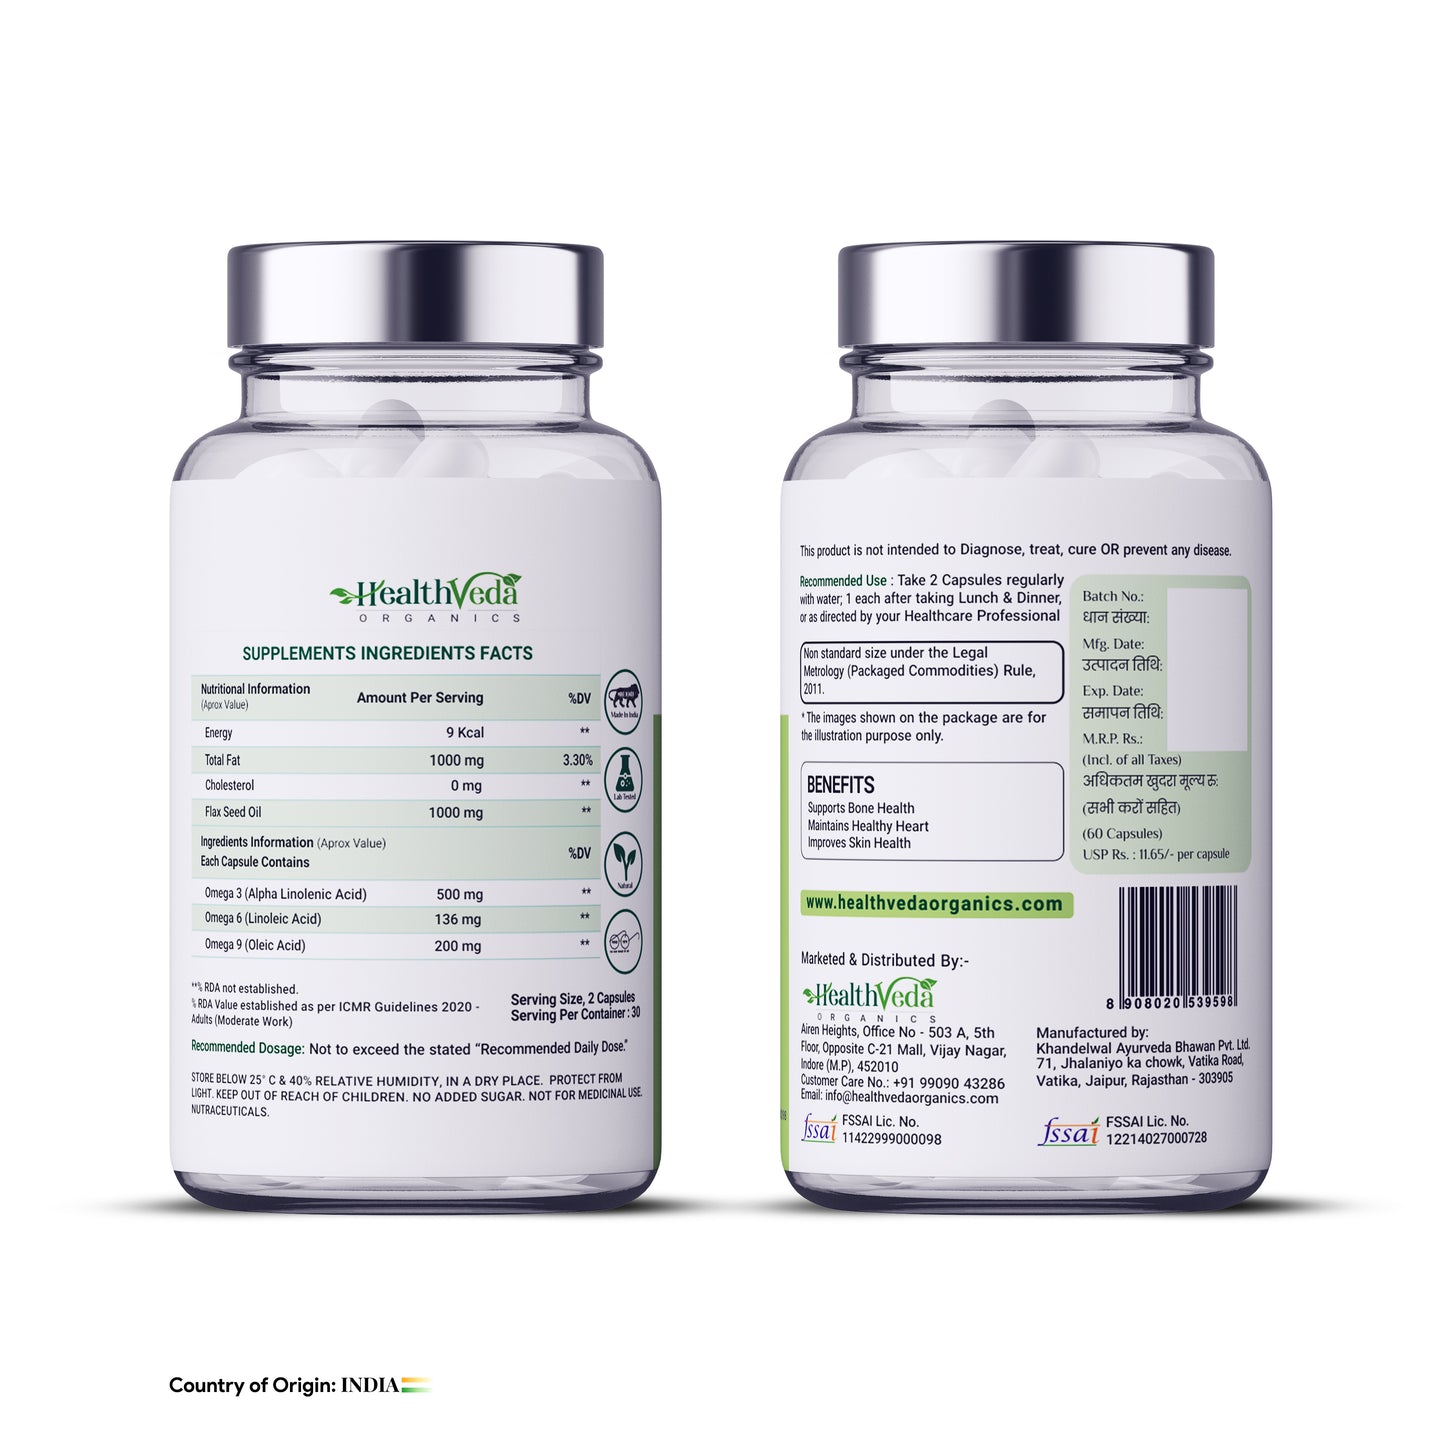 HealthVeda Organics Vegan Omega 3-6-9 Flaxseed Oil(1000mg) for Healthy Bones, Hair&Skin|60 Veg Soft Gel Capsules for Both Women & Men